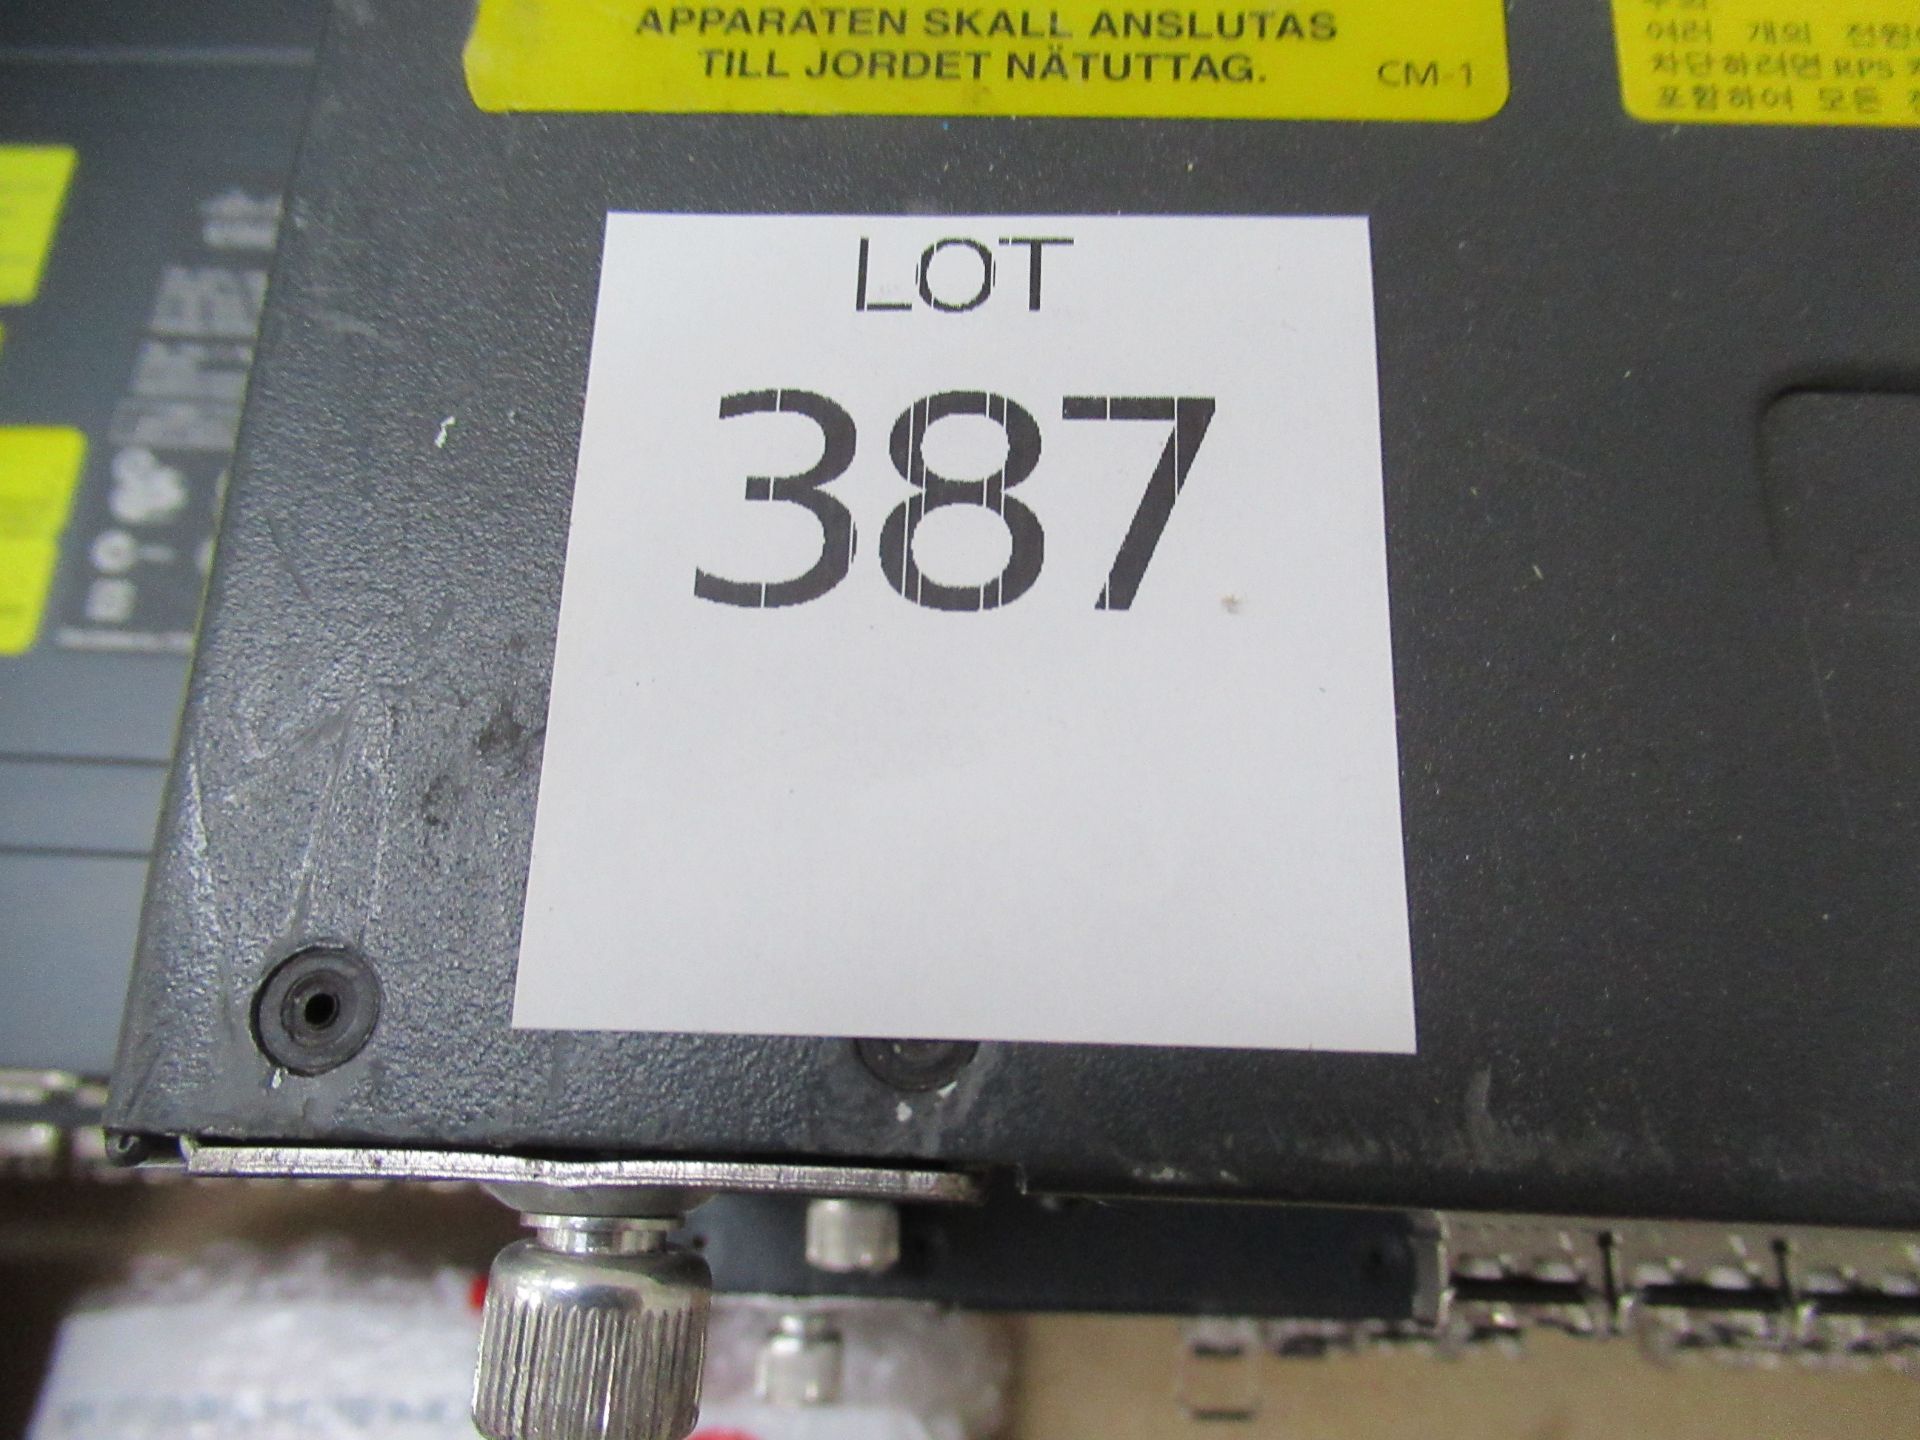 2 x EMC Corp KTN-STL3 15 Port Hard Drive Holders 2tb, 5 x Various Fan Units, 1 x HPE Procurve HP - Image 51 of 54